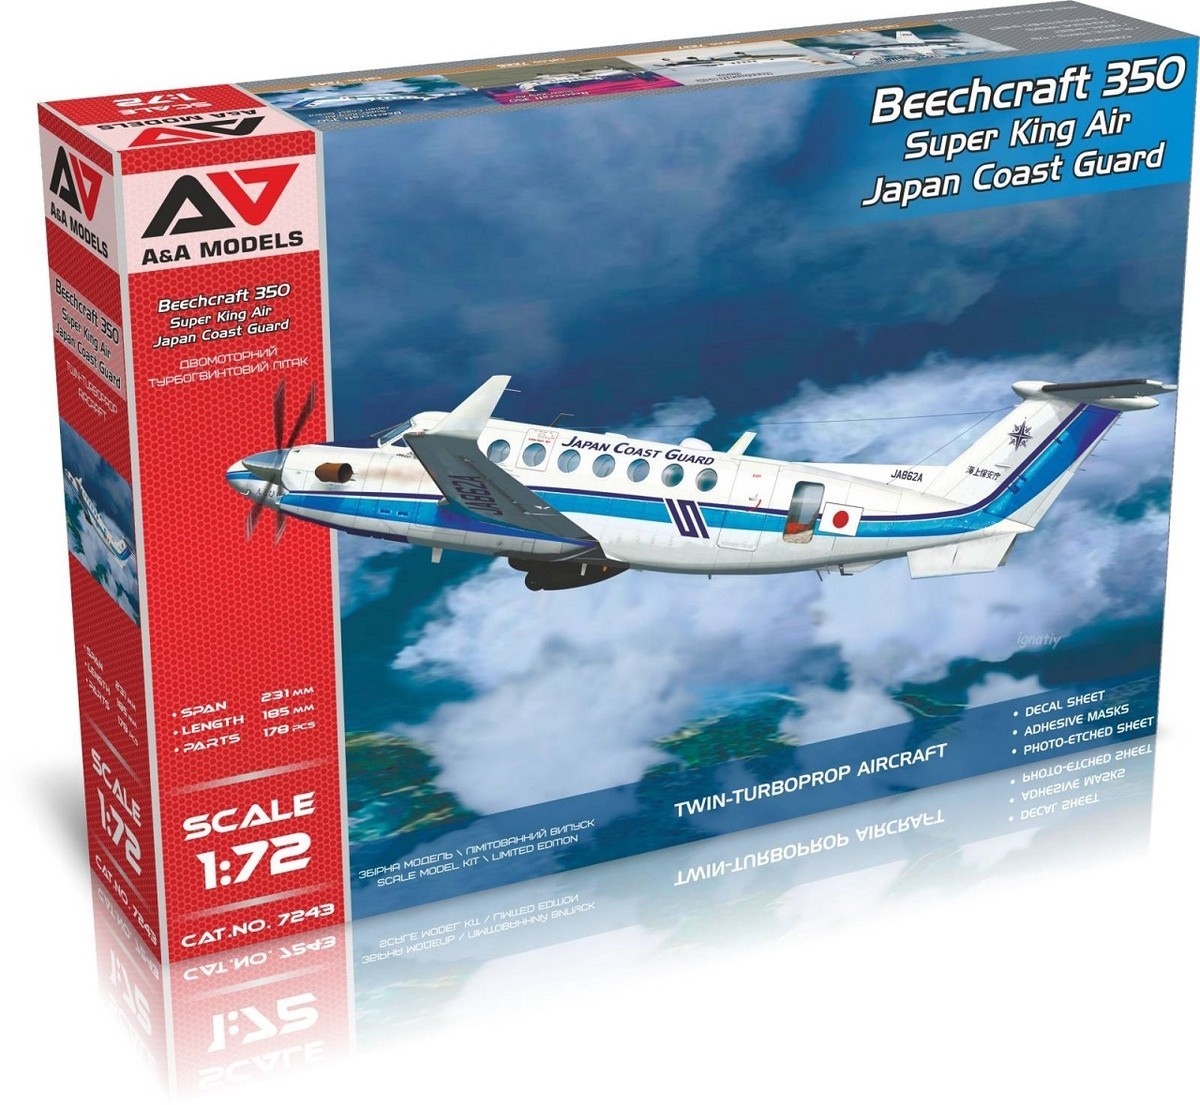 Japan Coast Guard Super King Air Released | AeroScale